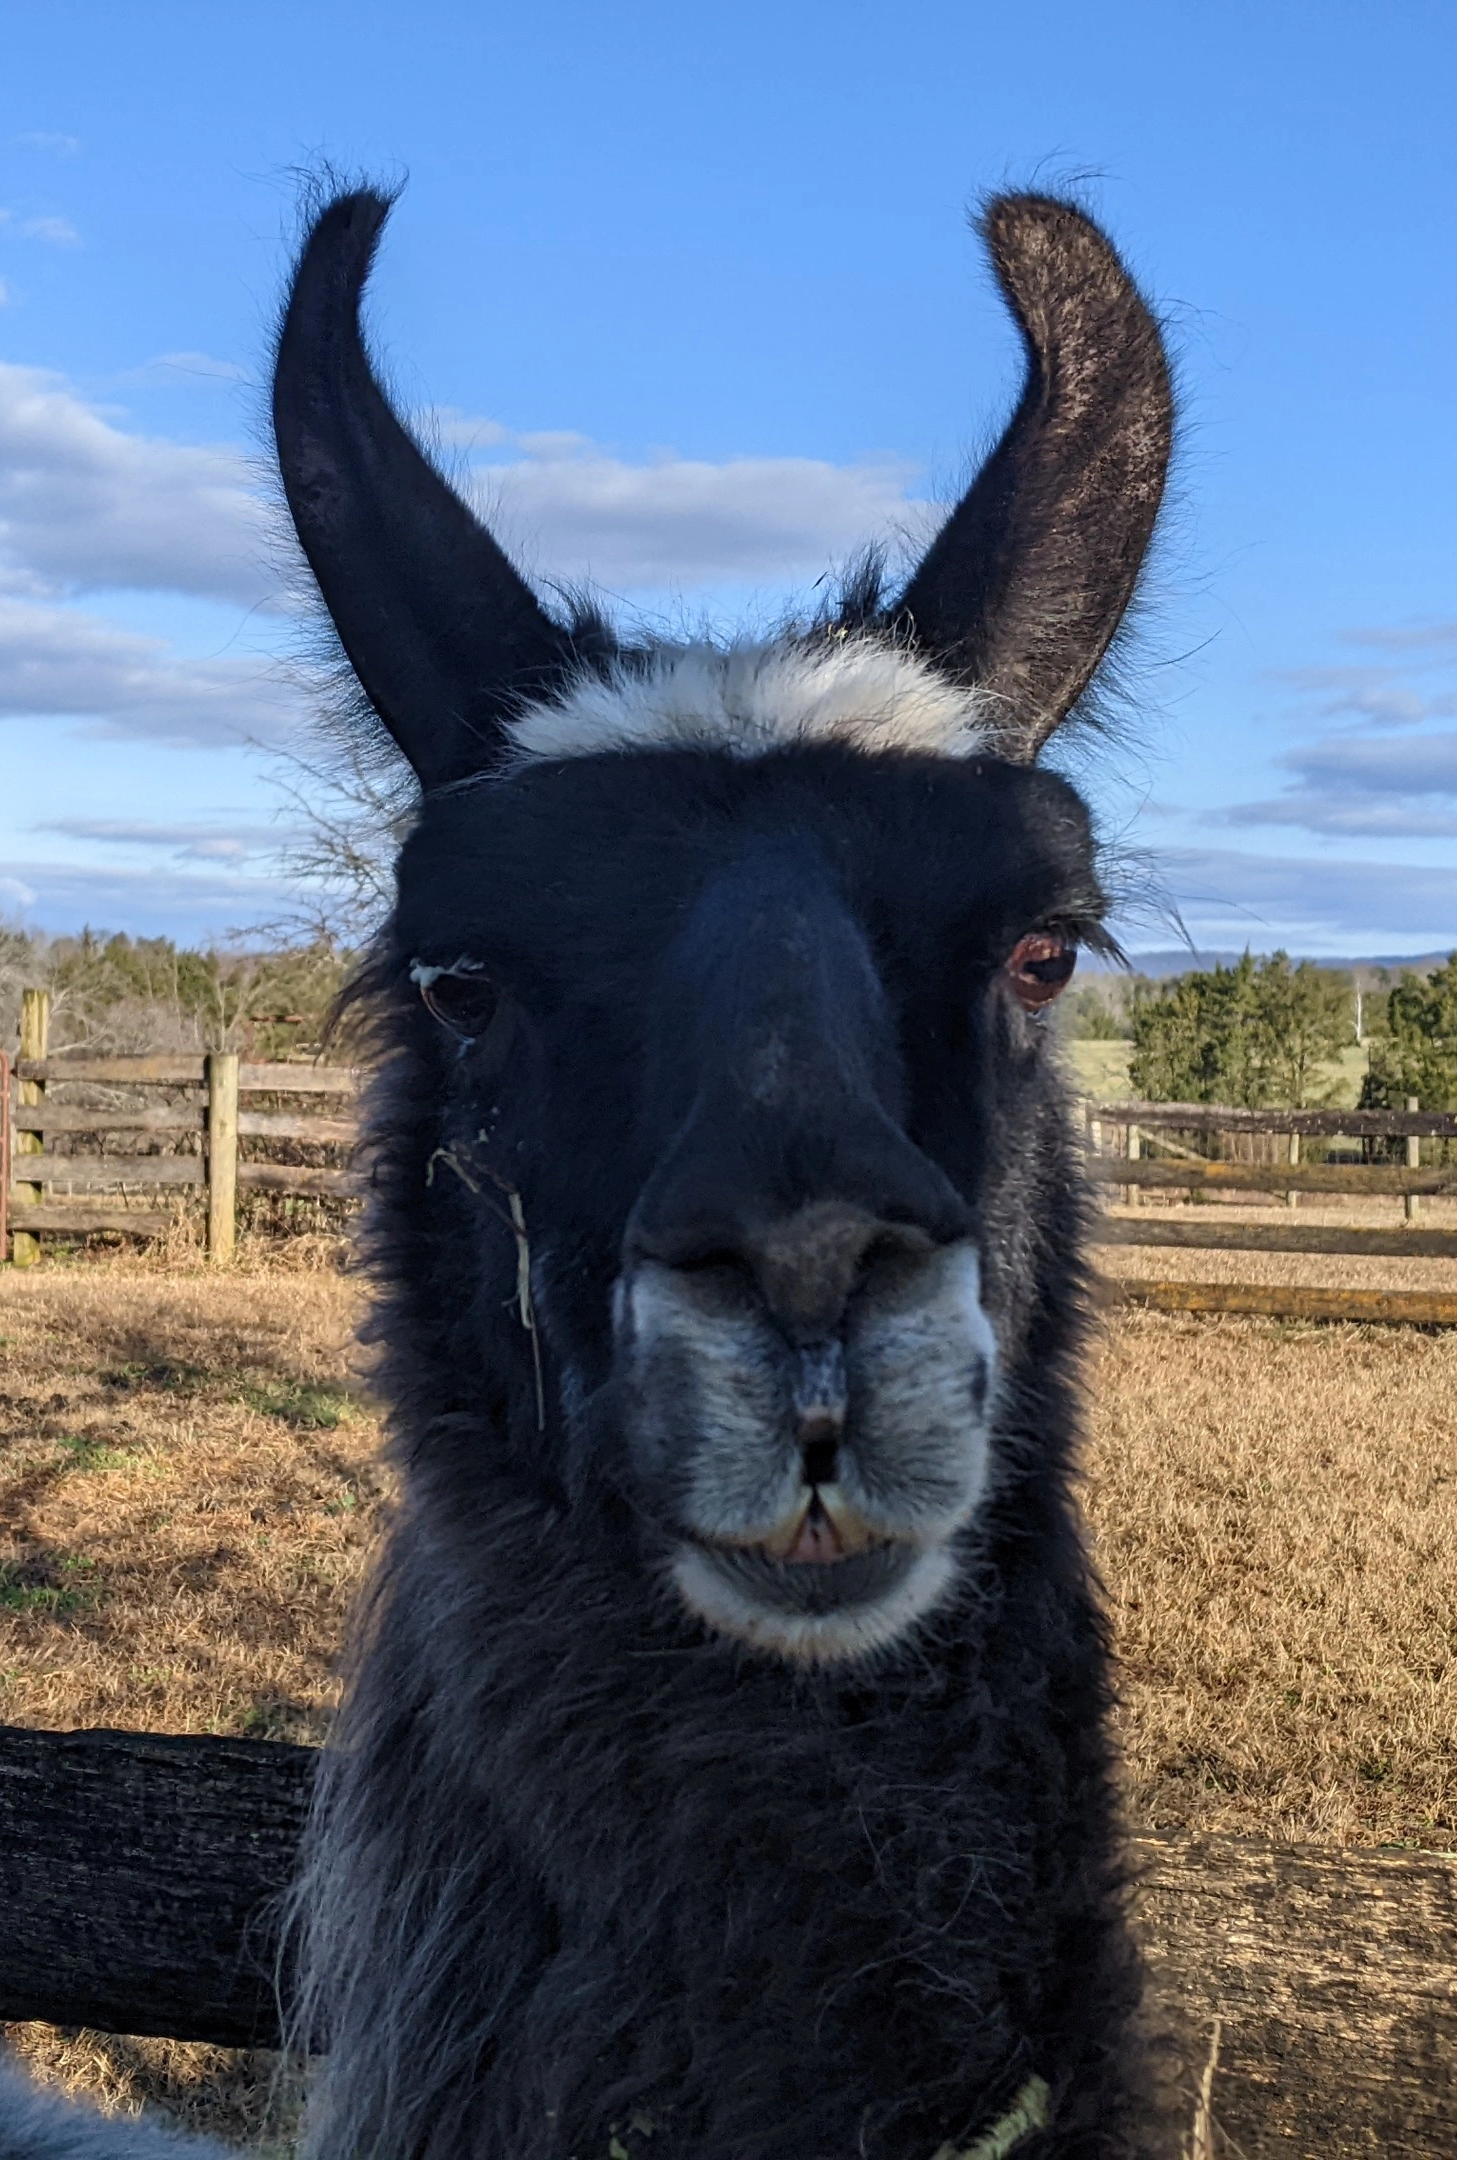 An image of a llama named Prince